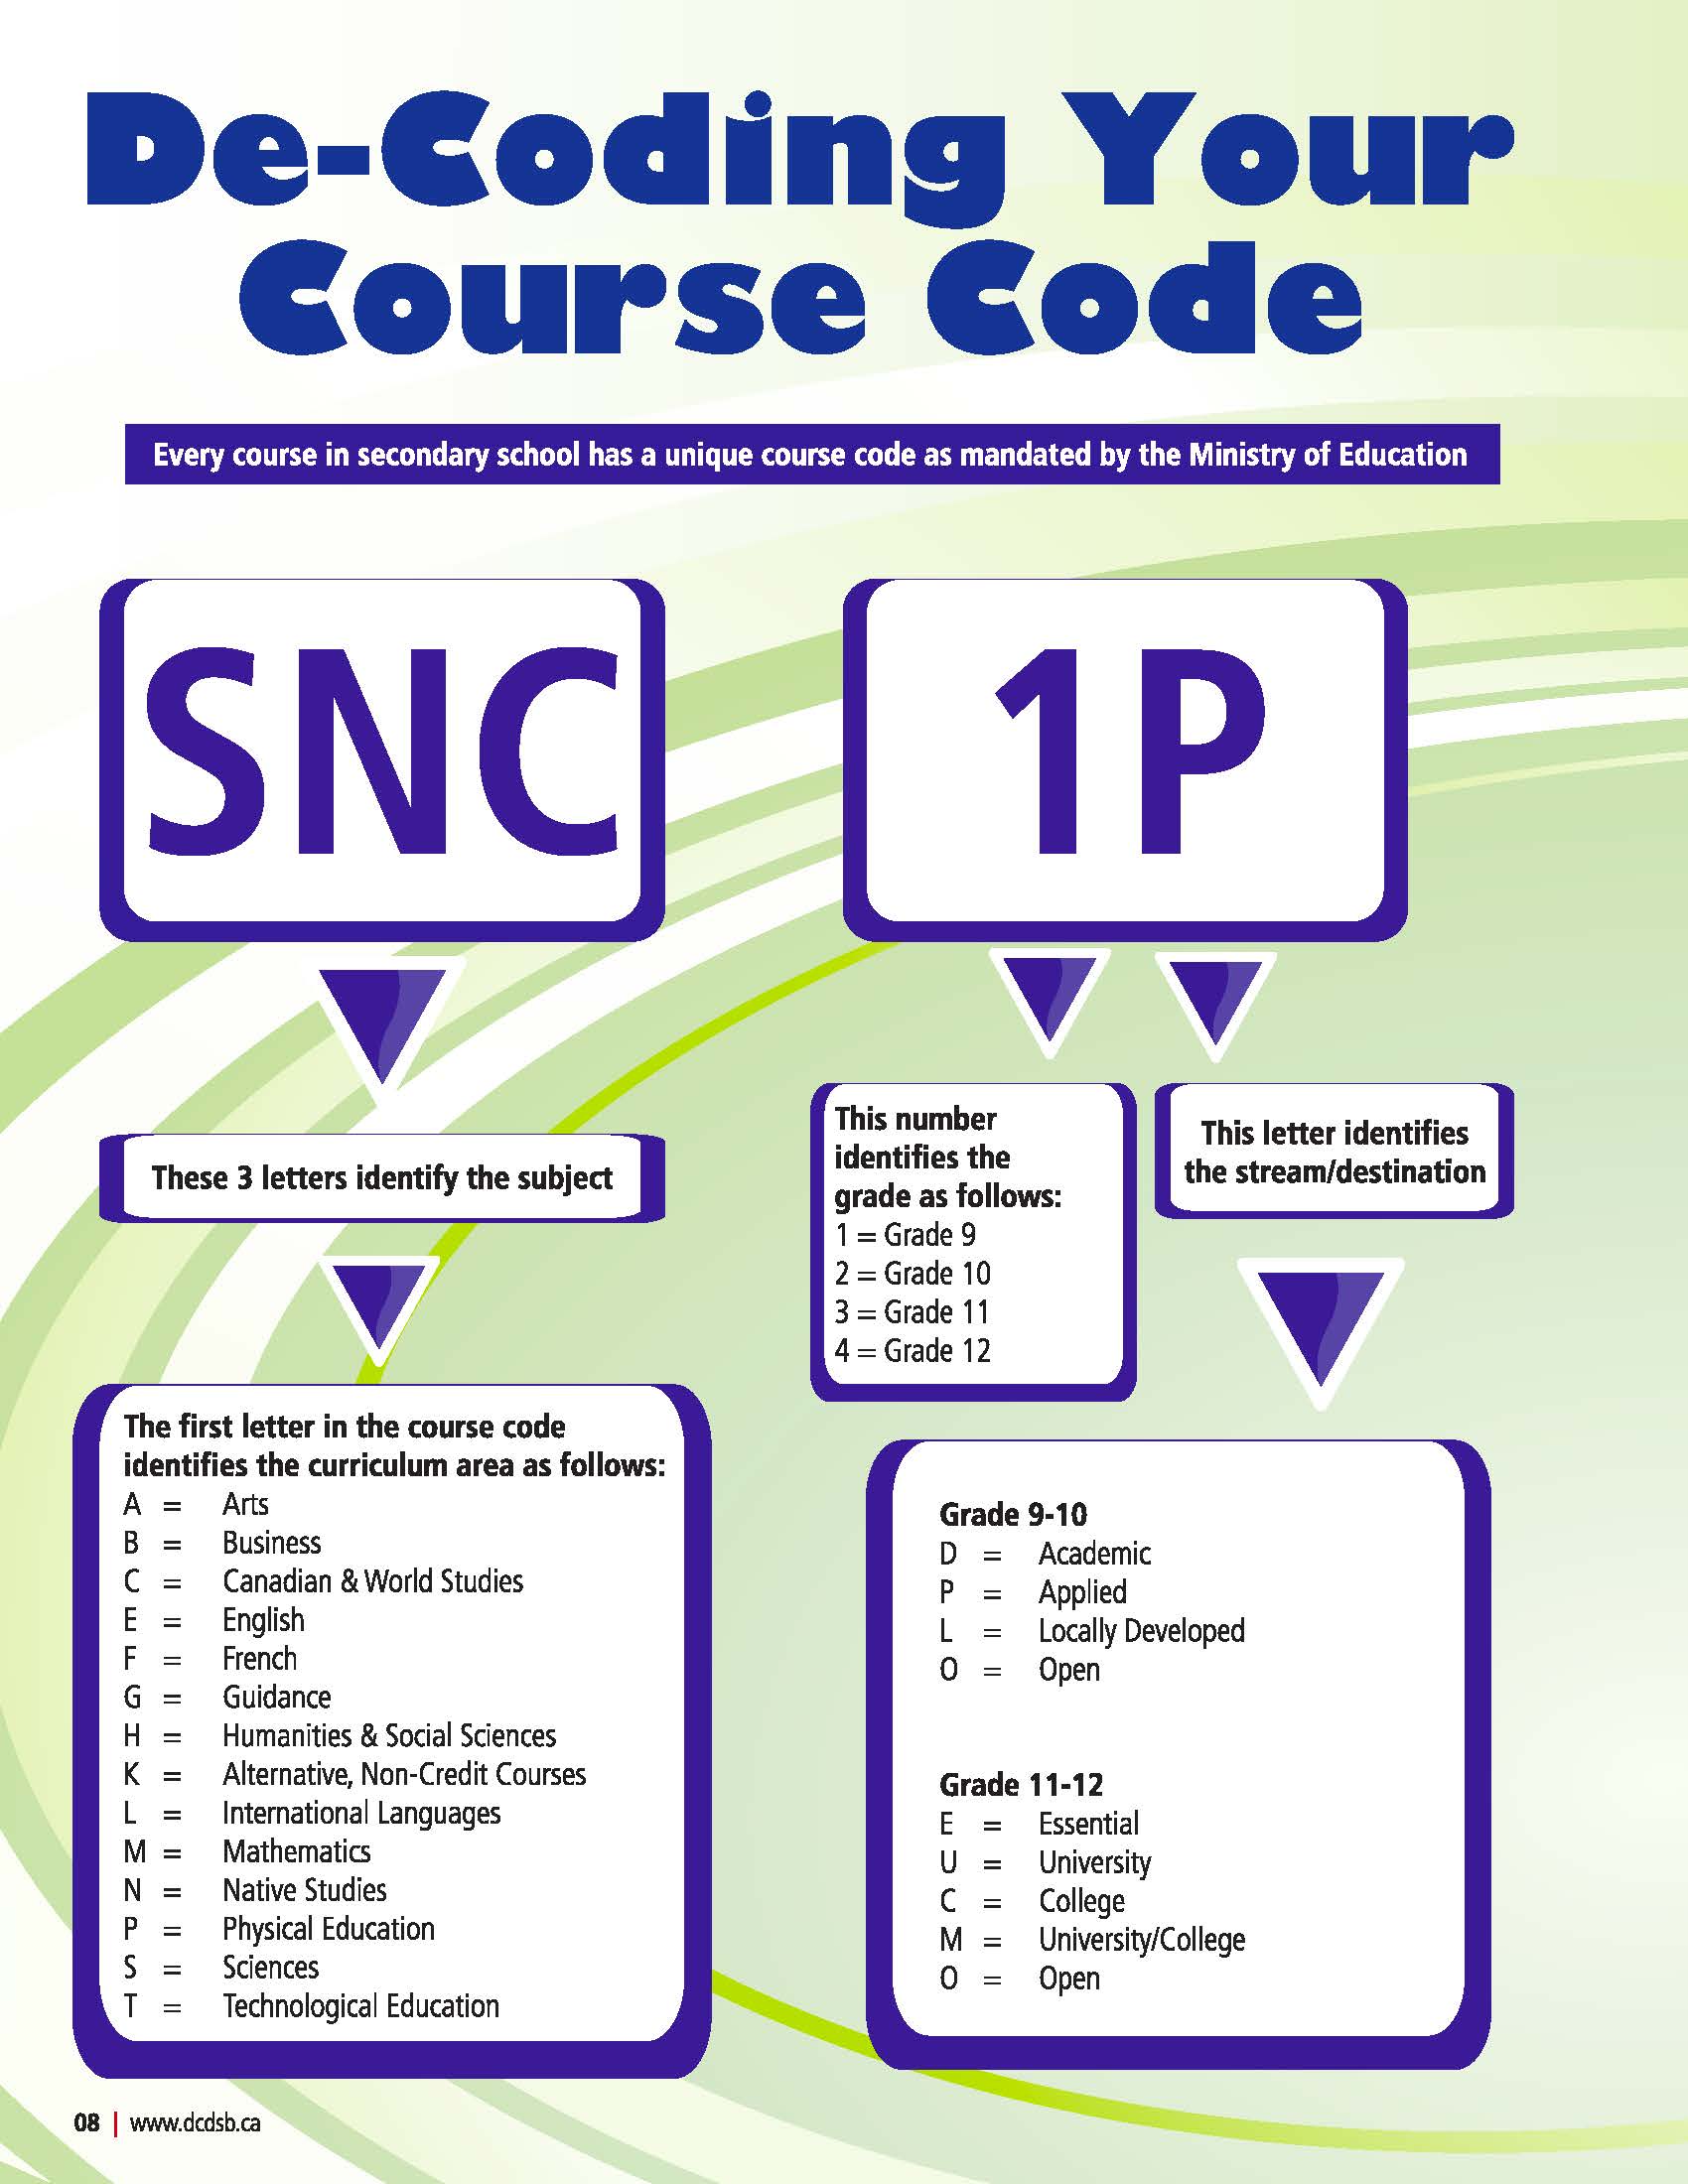 De-coding course codes